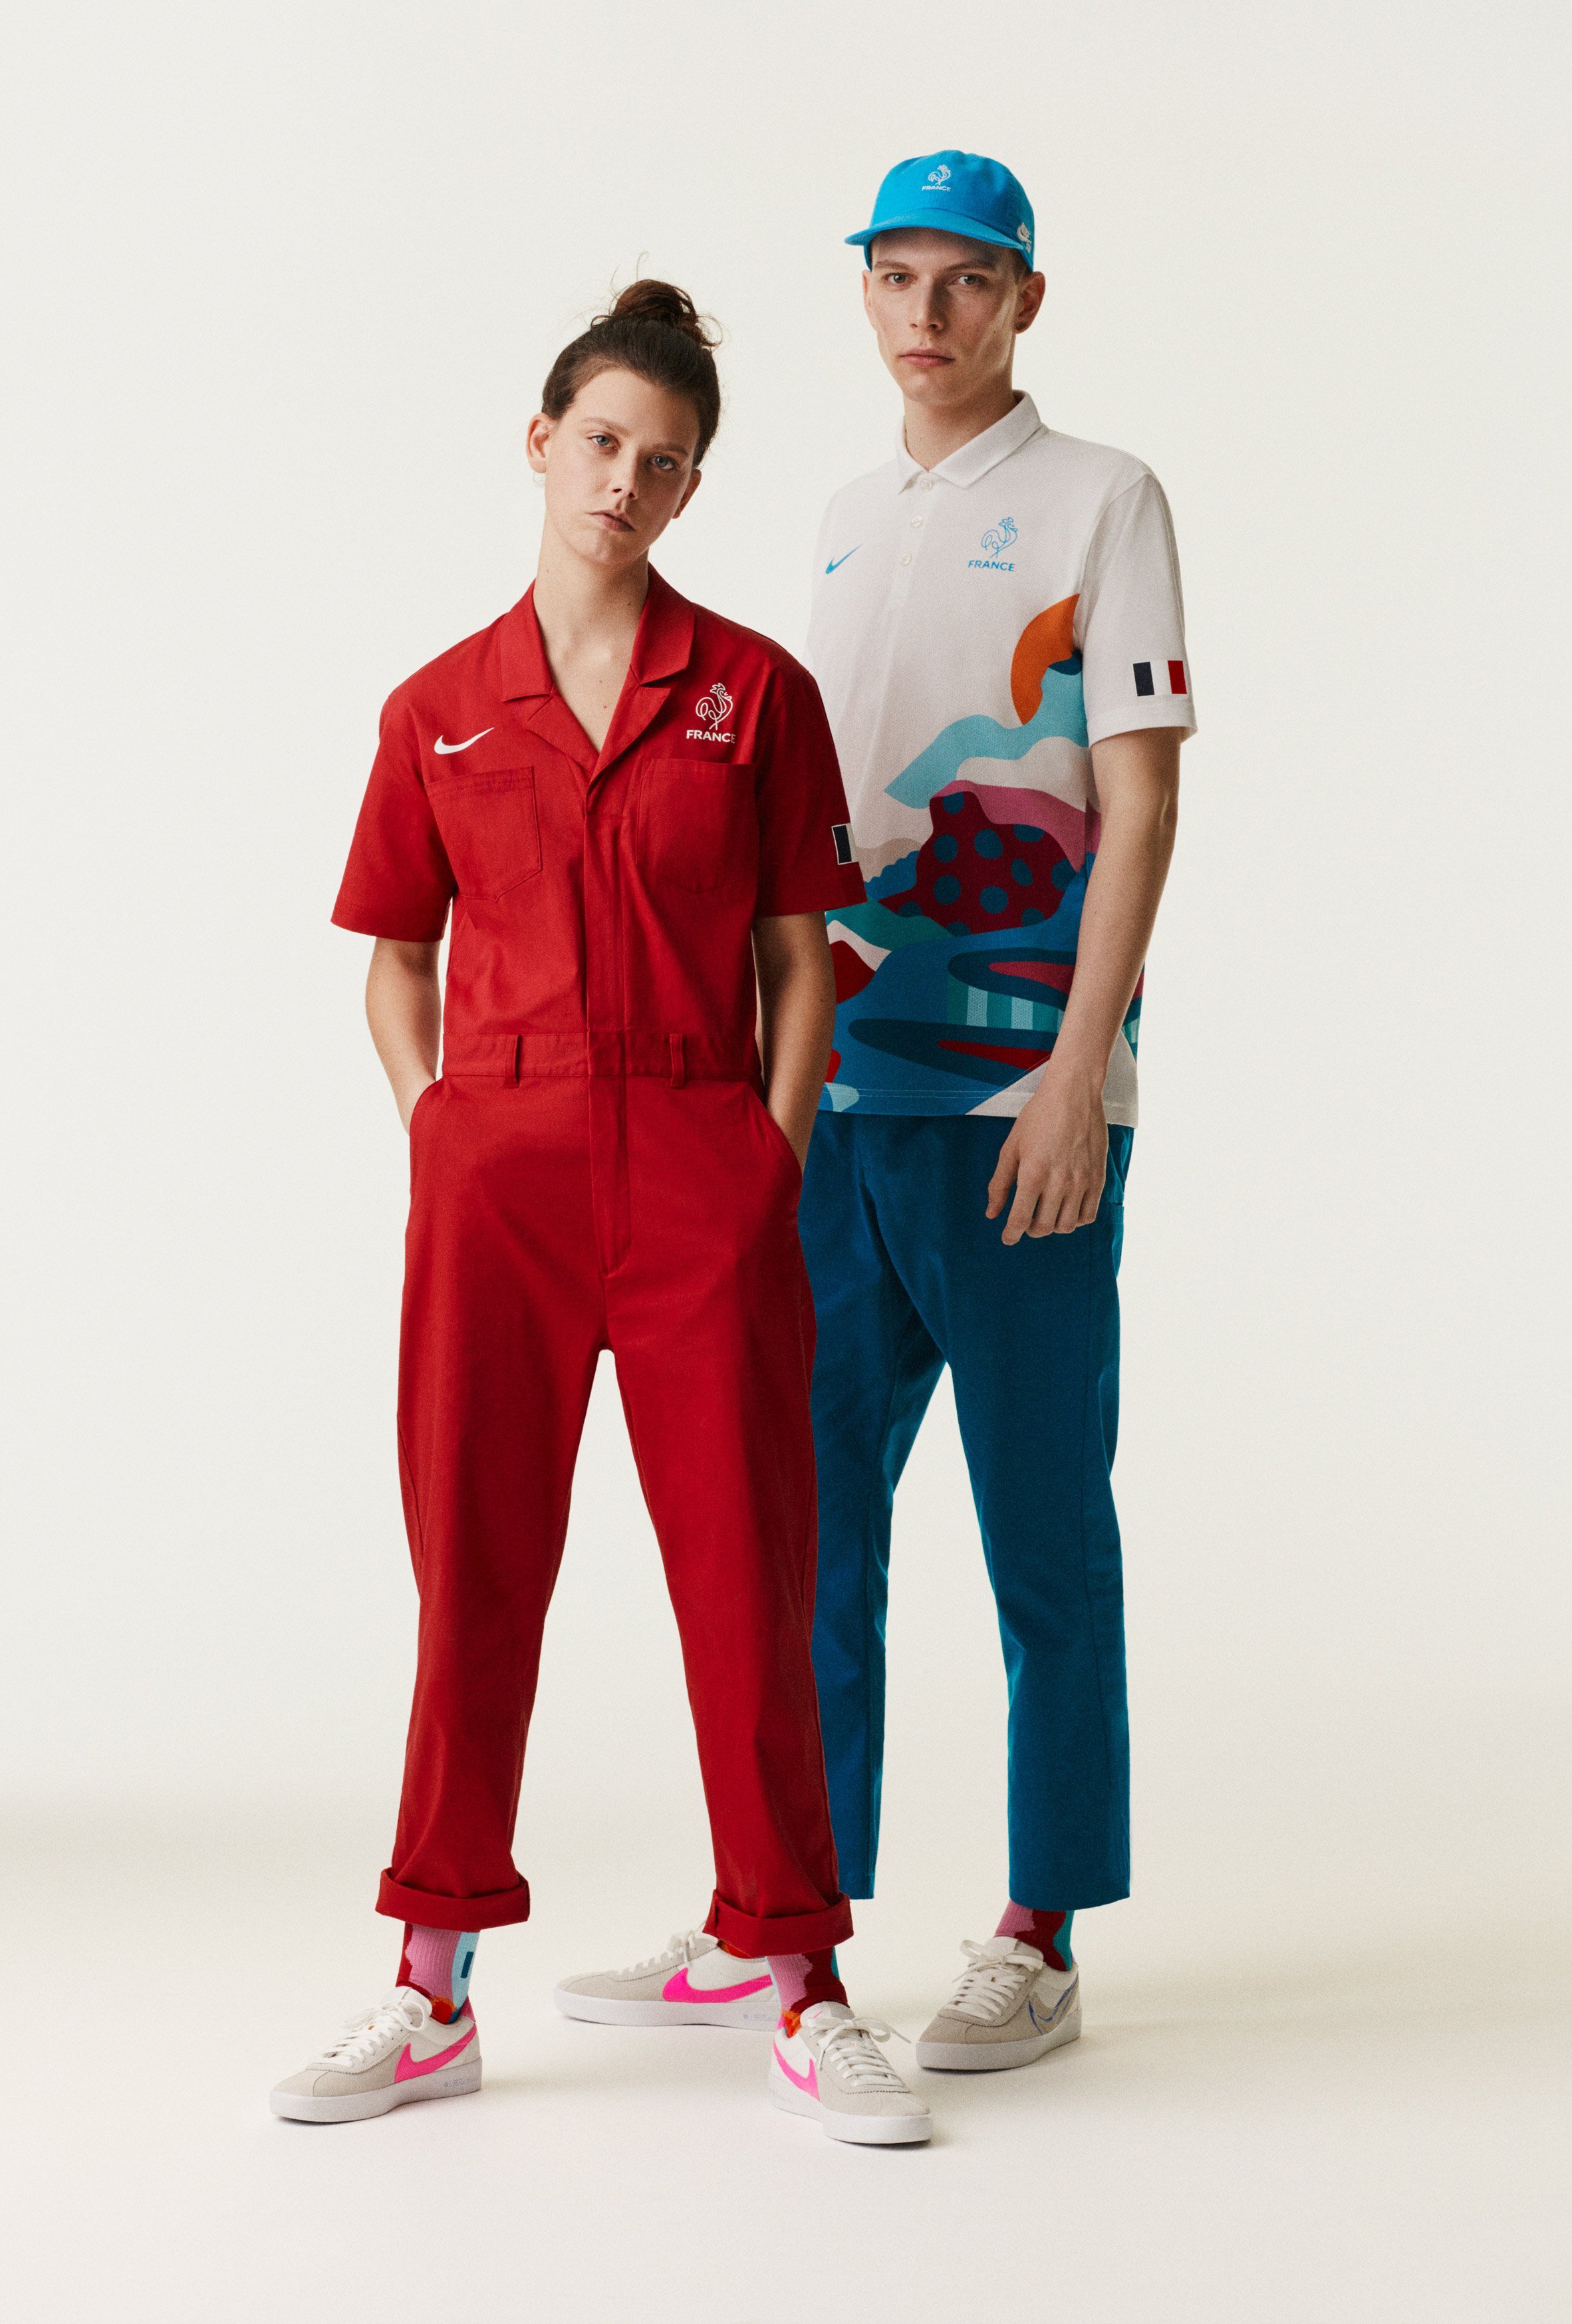 nike-olympics-2020-skateboard-uniforms_d